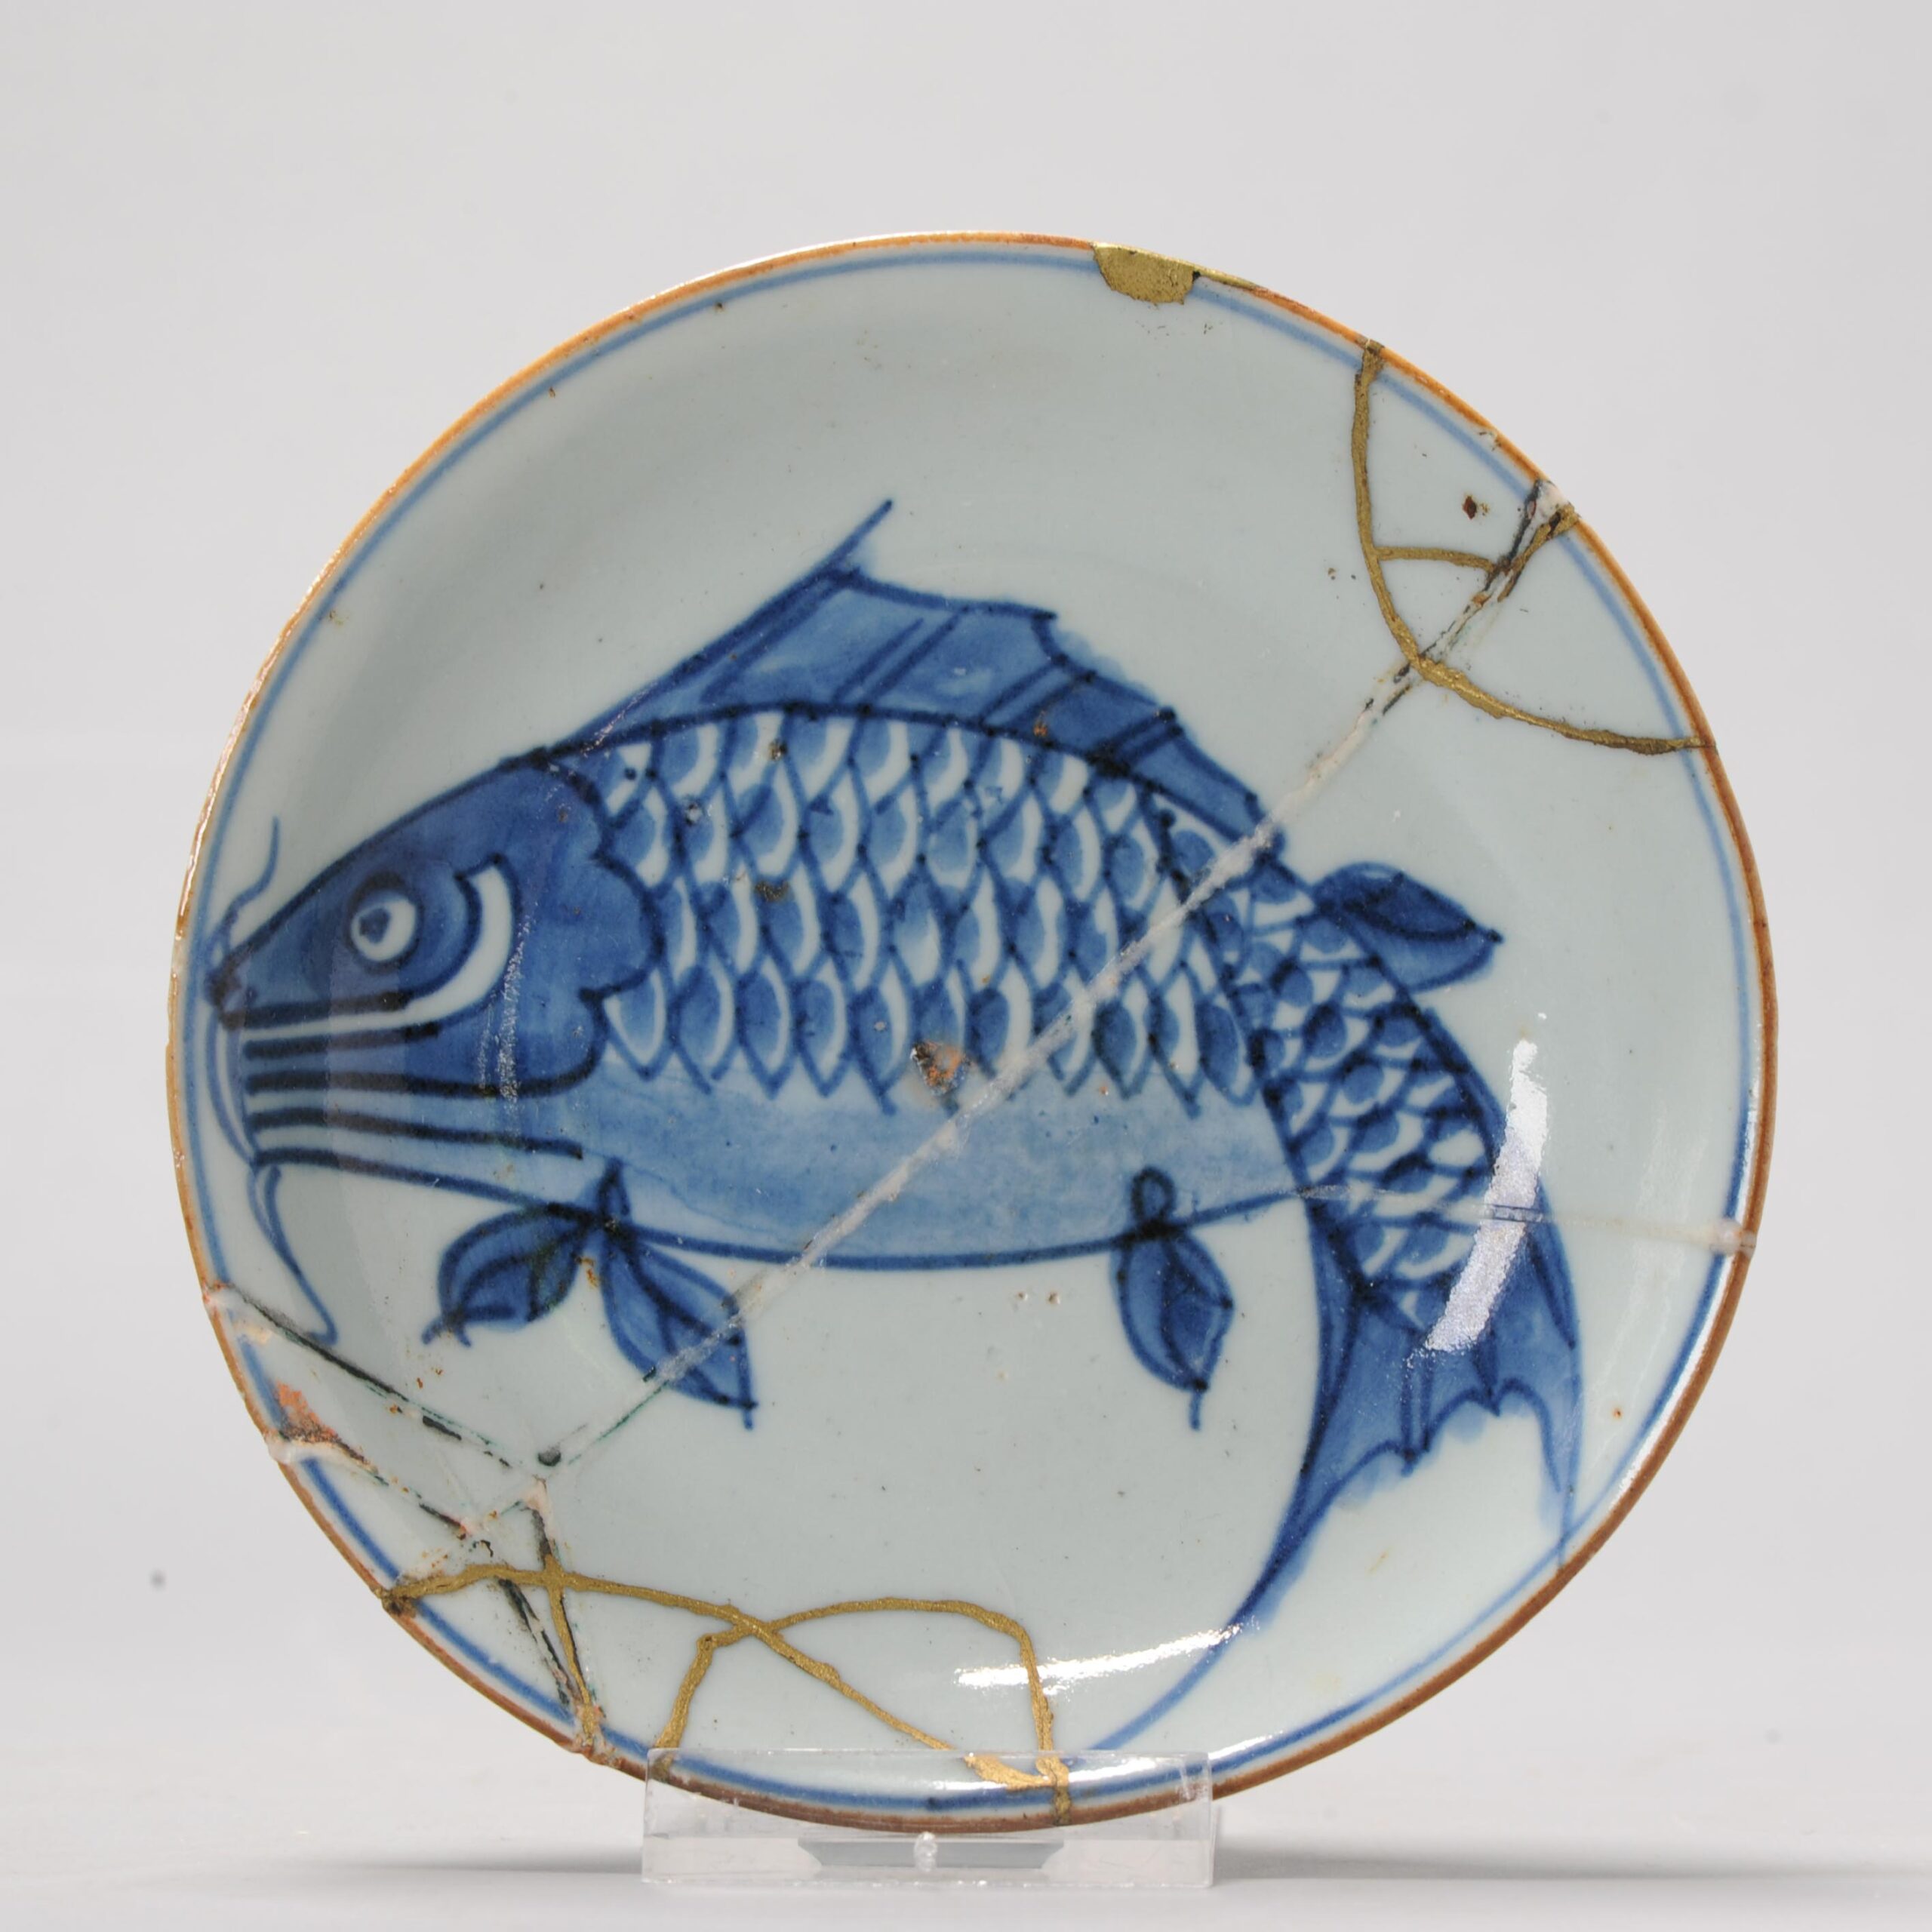 1135 A Chinese Shunzhi / early Kangxi plate 1660-1680 with a fish